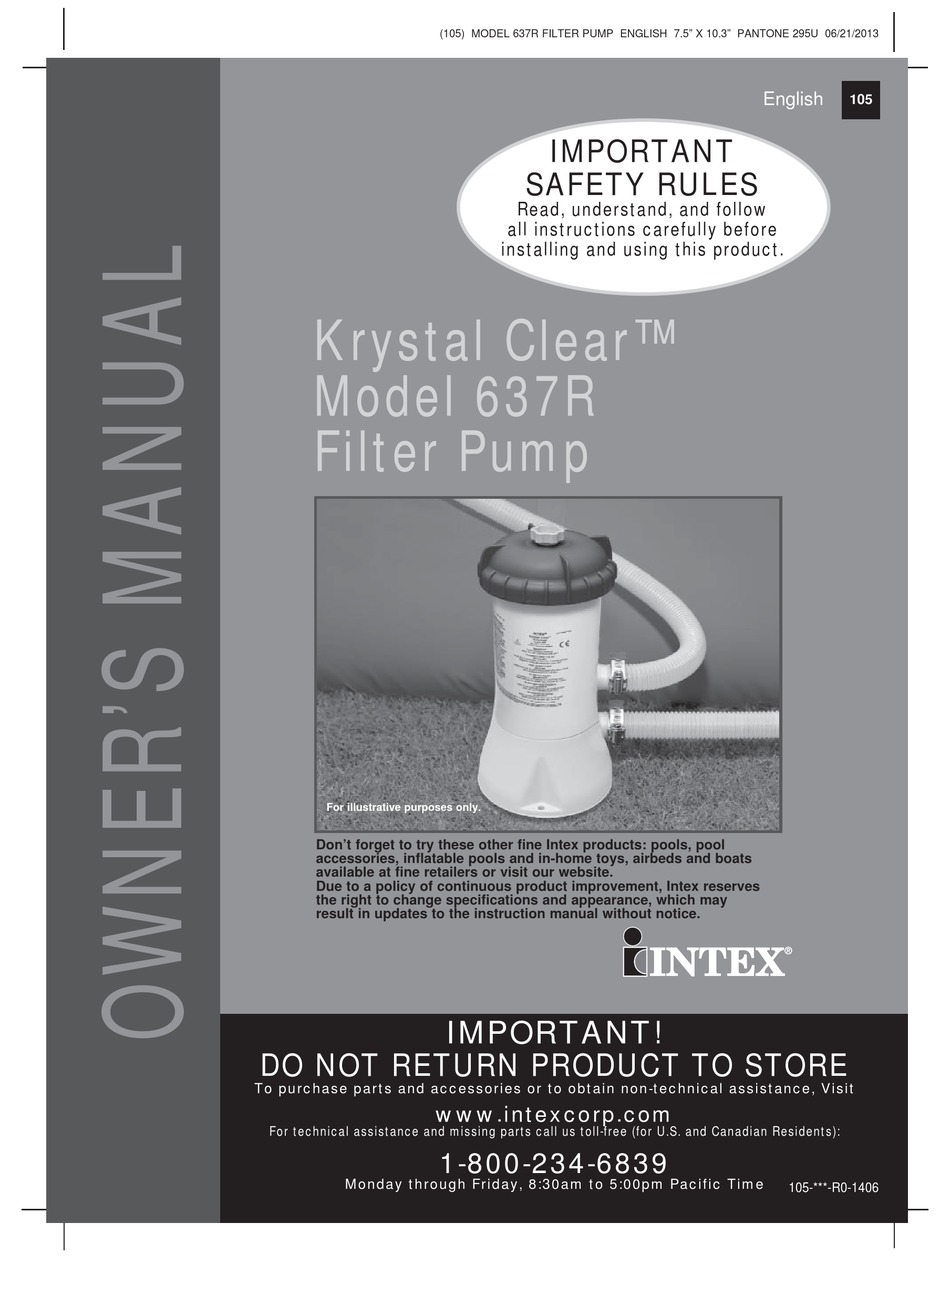 INTEX KRYSTAL CLEAR 637R OWNER'S MANUAL Pdf Download | ManualsLib